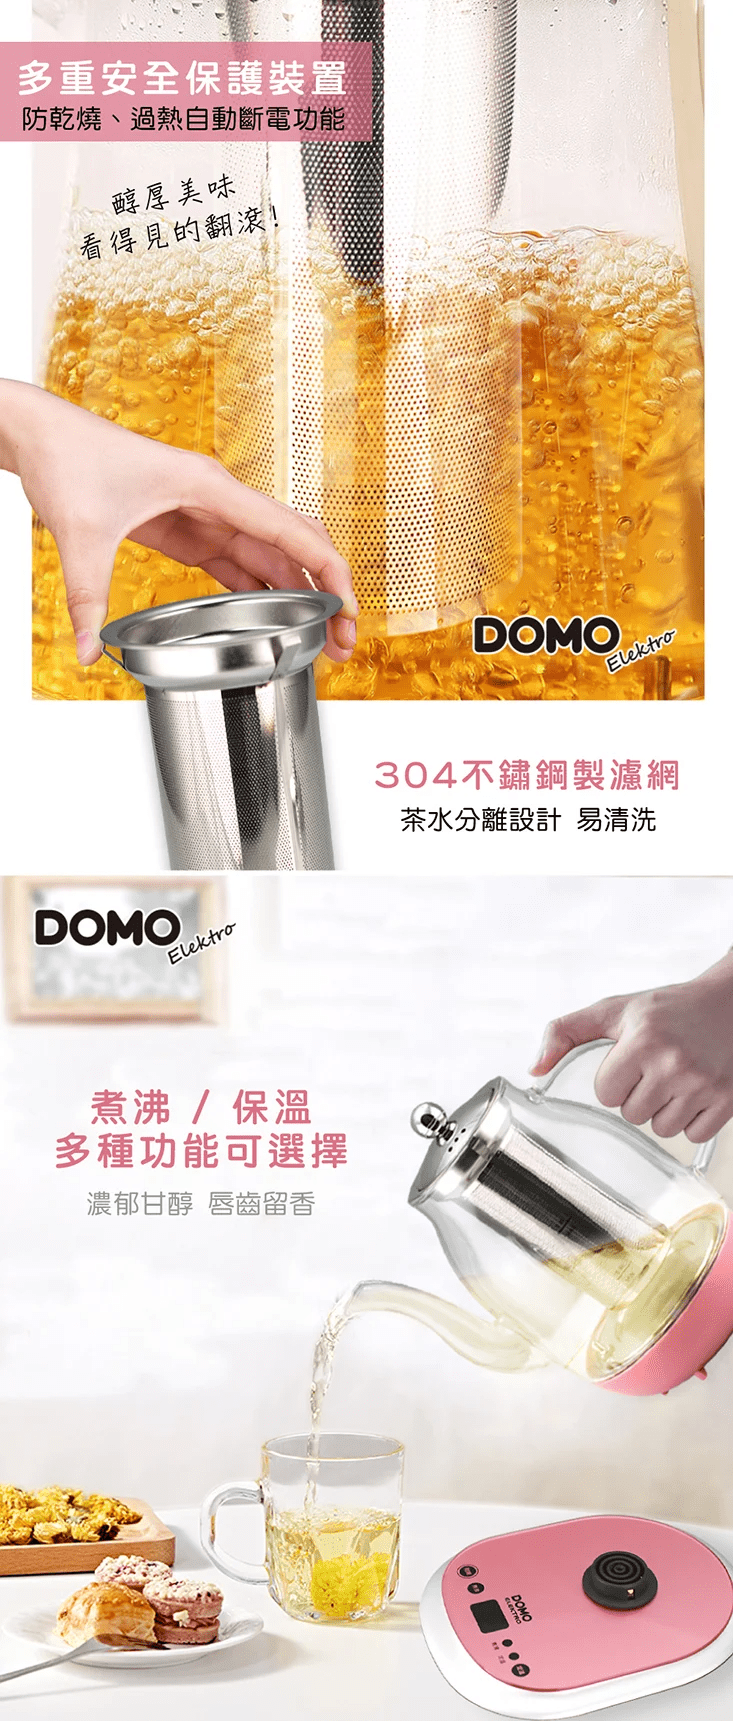 DOMO 1L微電腦斷電玻璃泡茶機 DM610WT